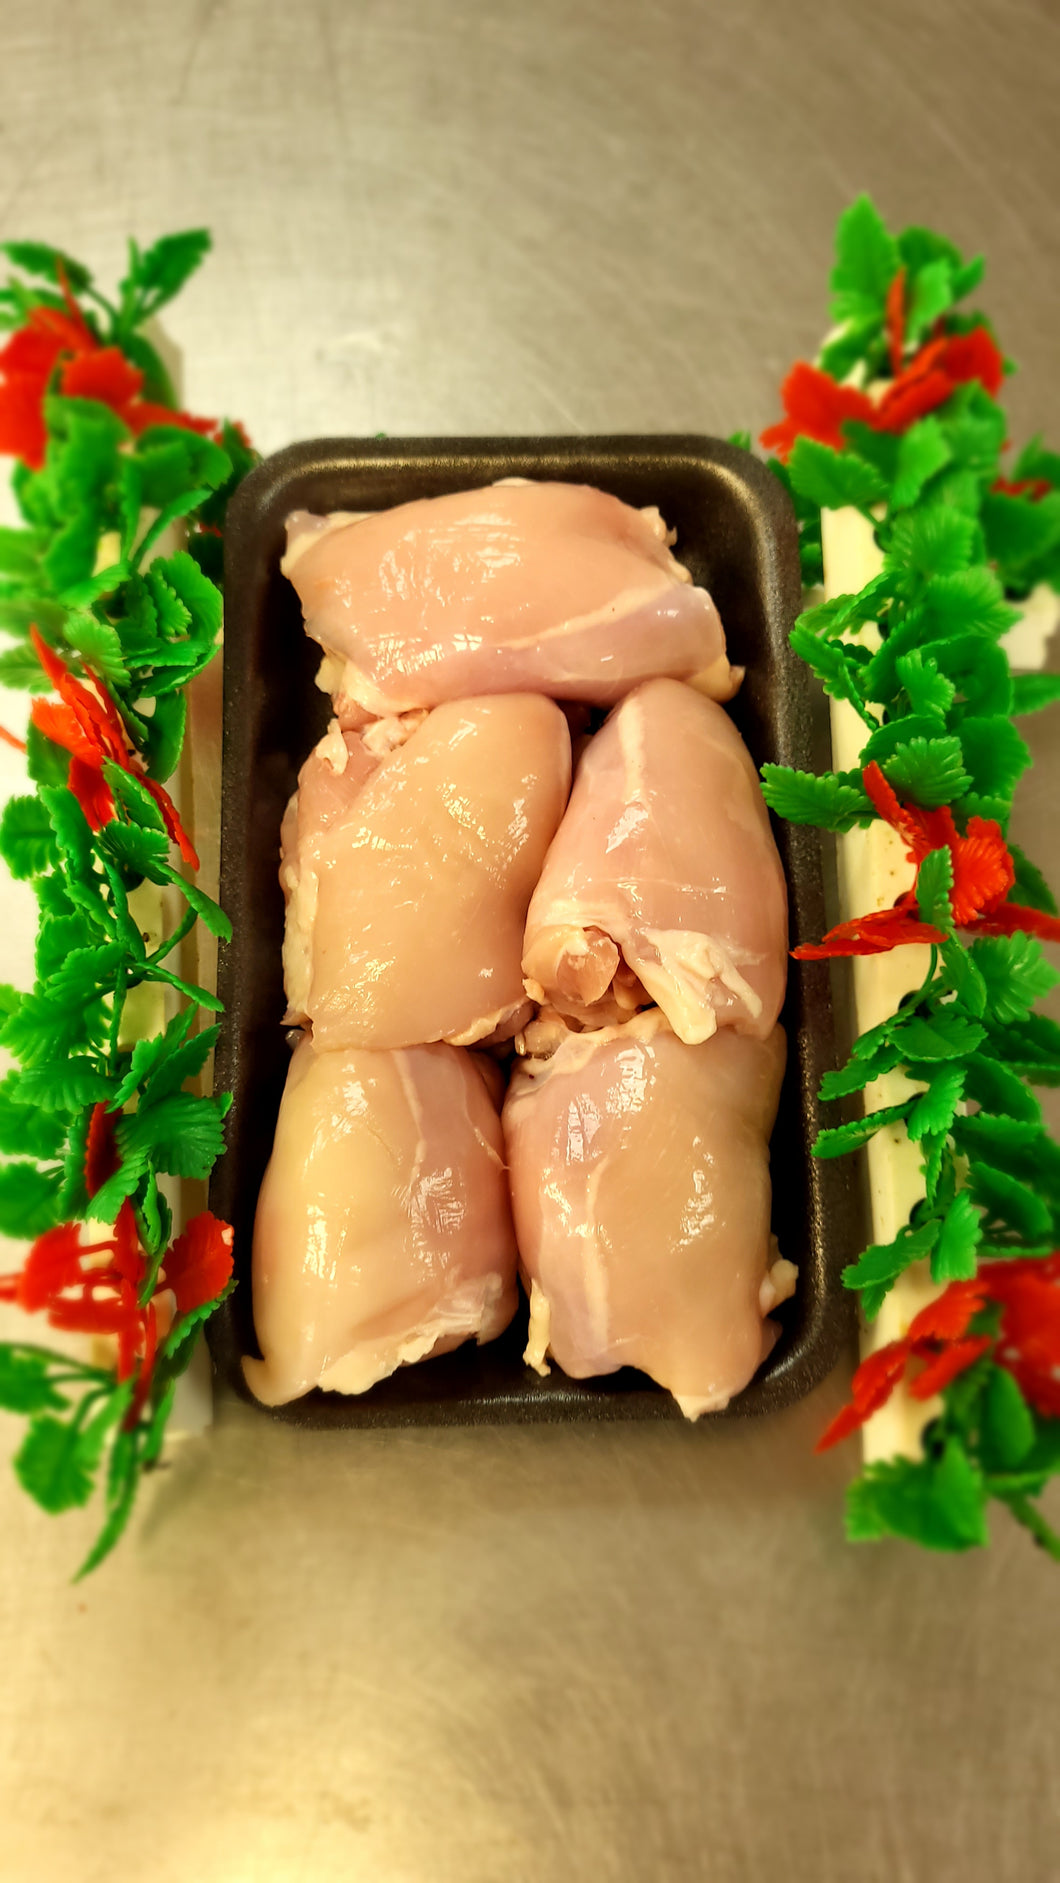 Chicken Thigh Skinless and Boneless 5 Pack